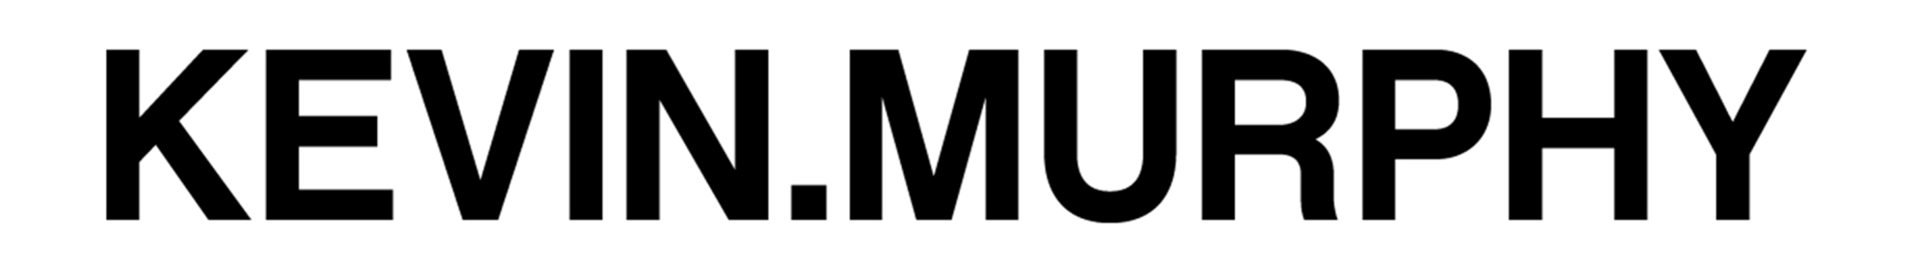 Image result for kevin murphy logo